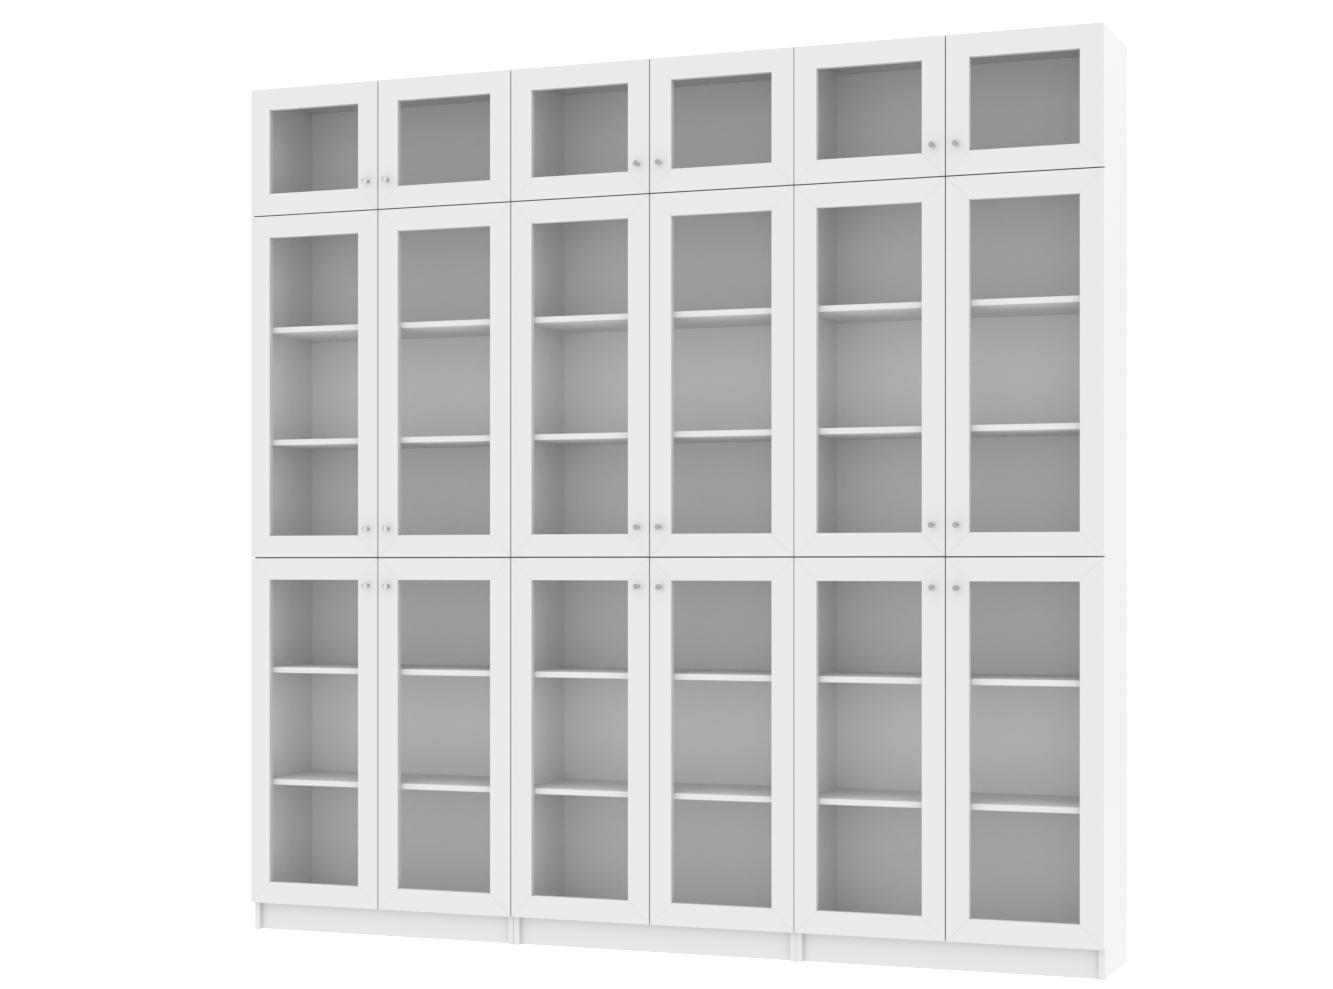 Книжный шкаф Билли 377 white ИКЕА (IKEA) изображение товара